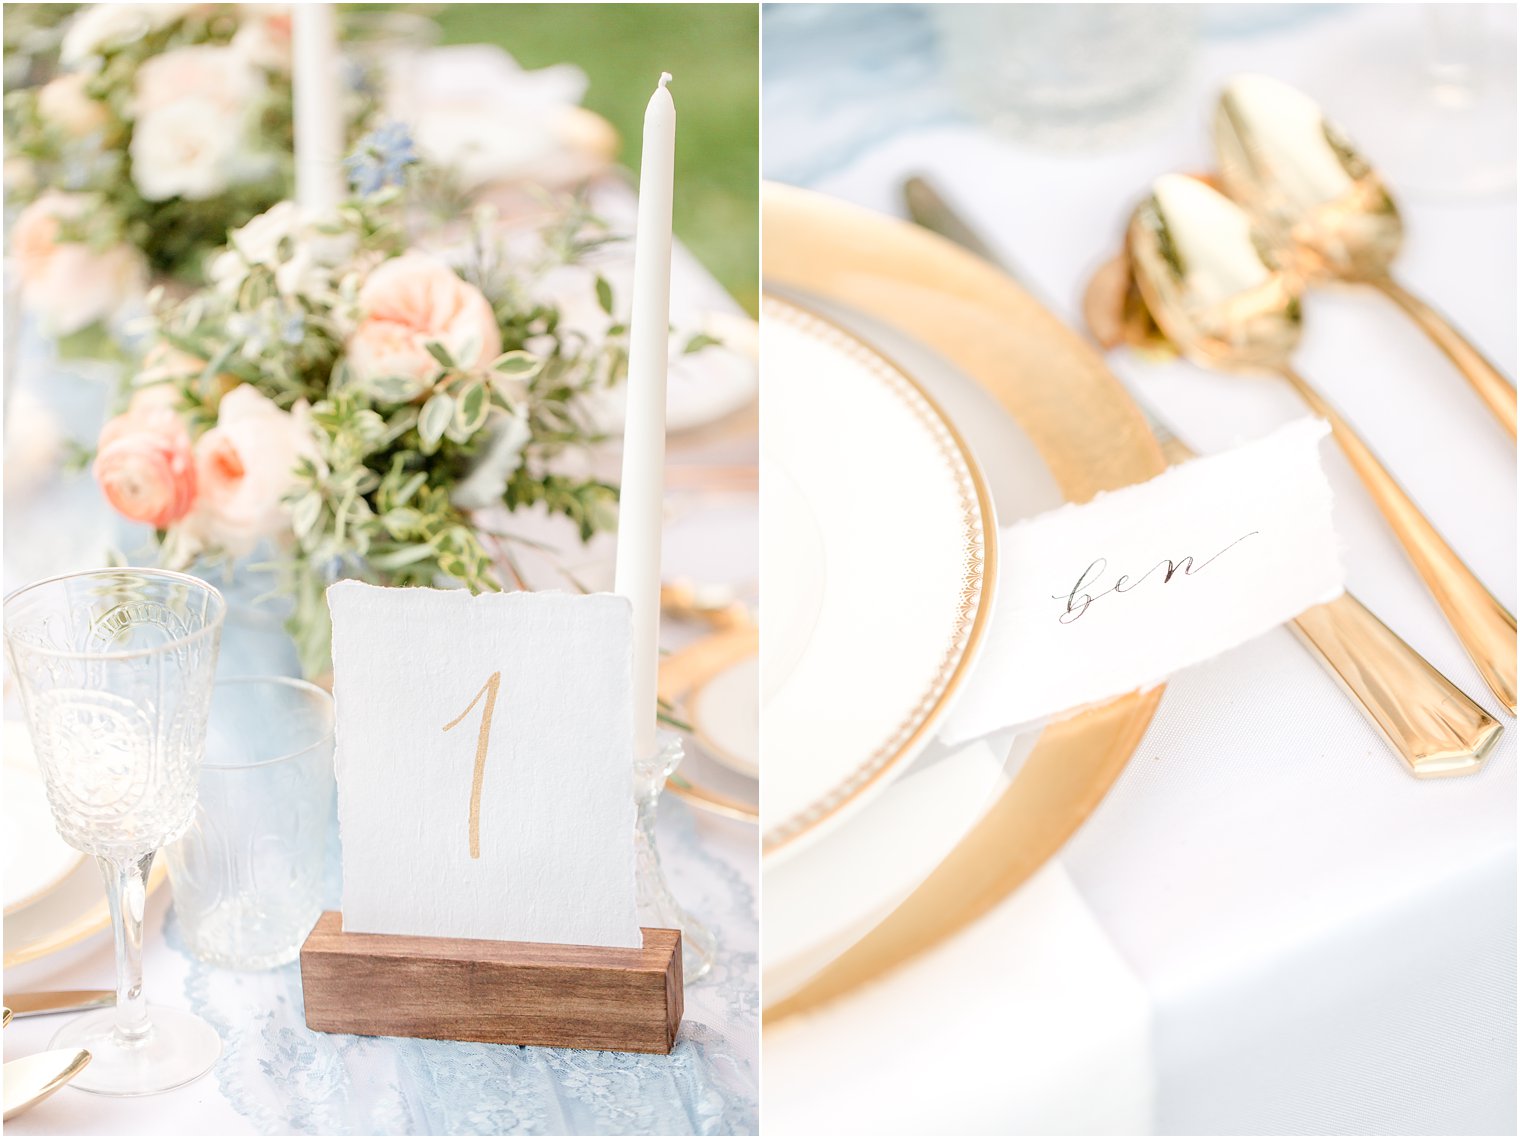 elegant peach and gold wedding reception details photographed by Stockton NJ wedding photographer Idalia Photography